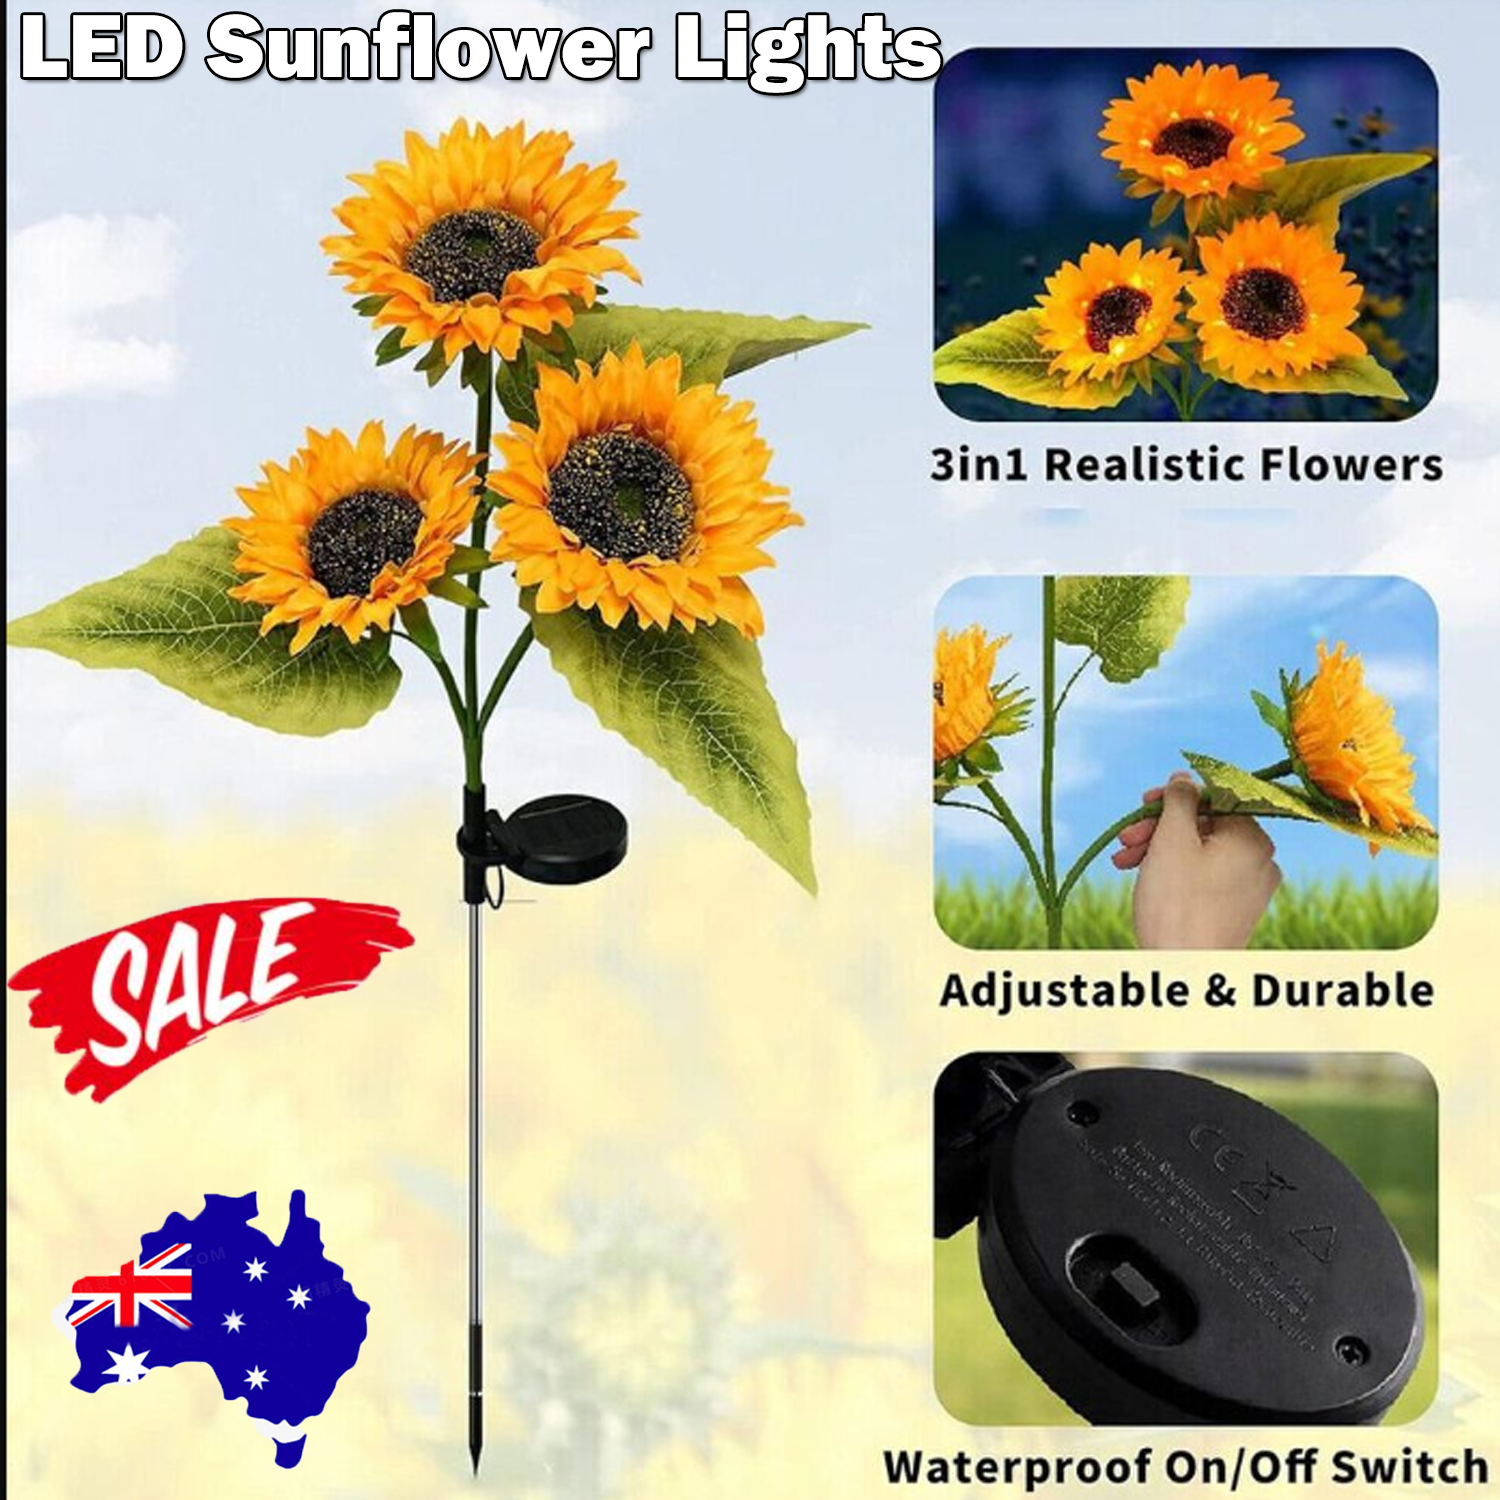 LED Solar Sunflower Lights Flower Lamp Landscape Lawn Path Garden AU Day - Shoppers Haven  - Home & Garden > Garden Lights     